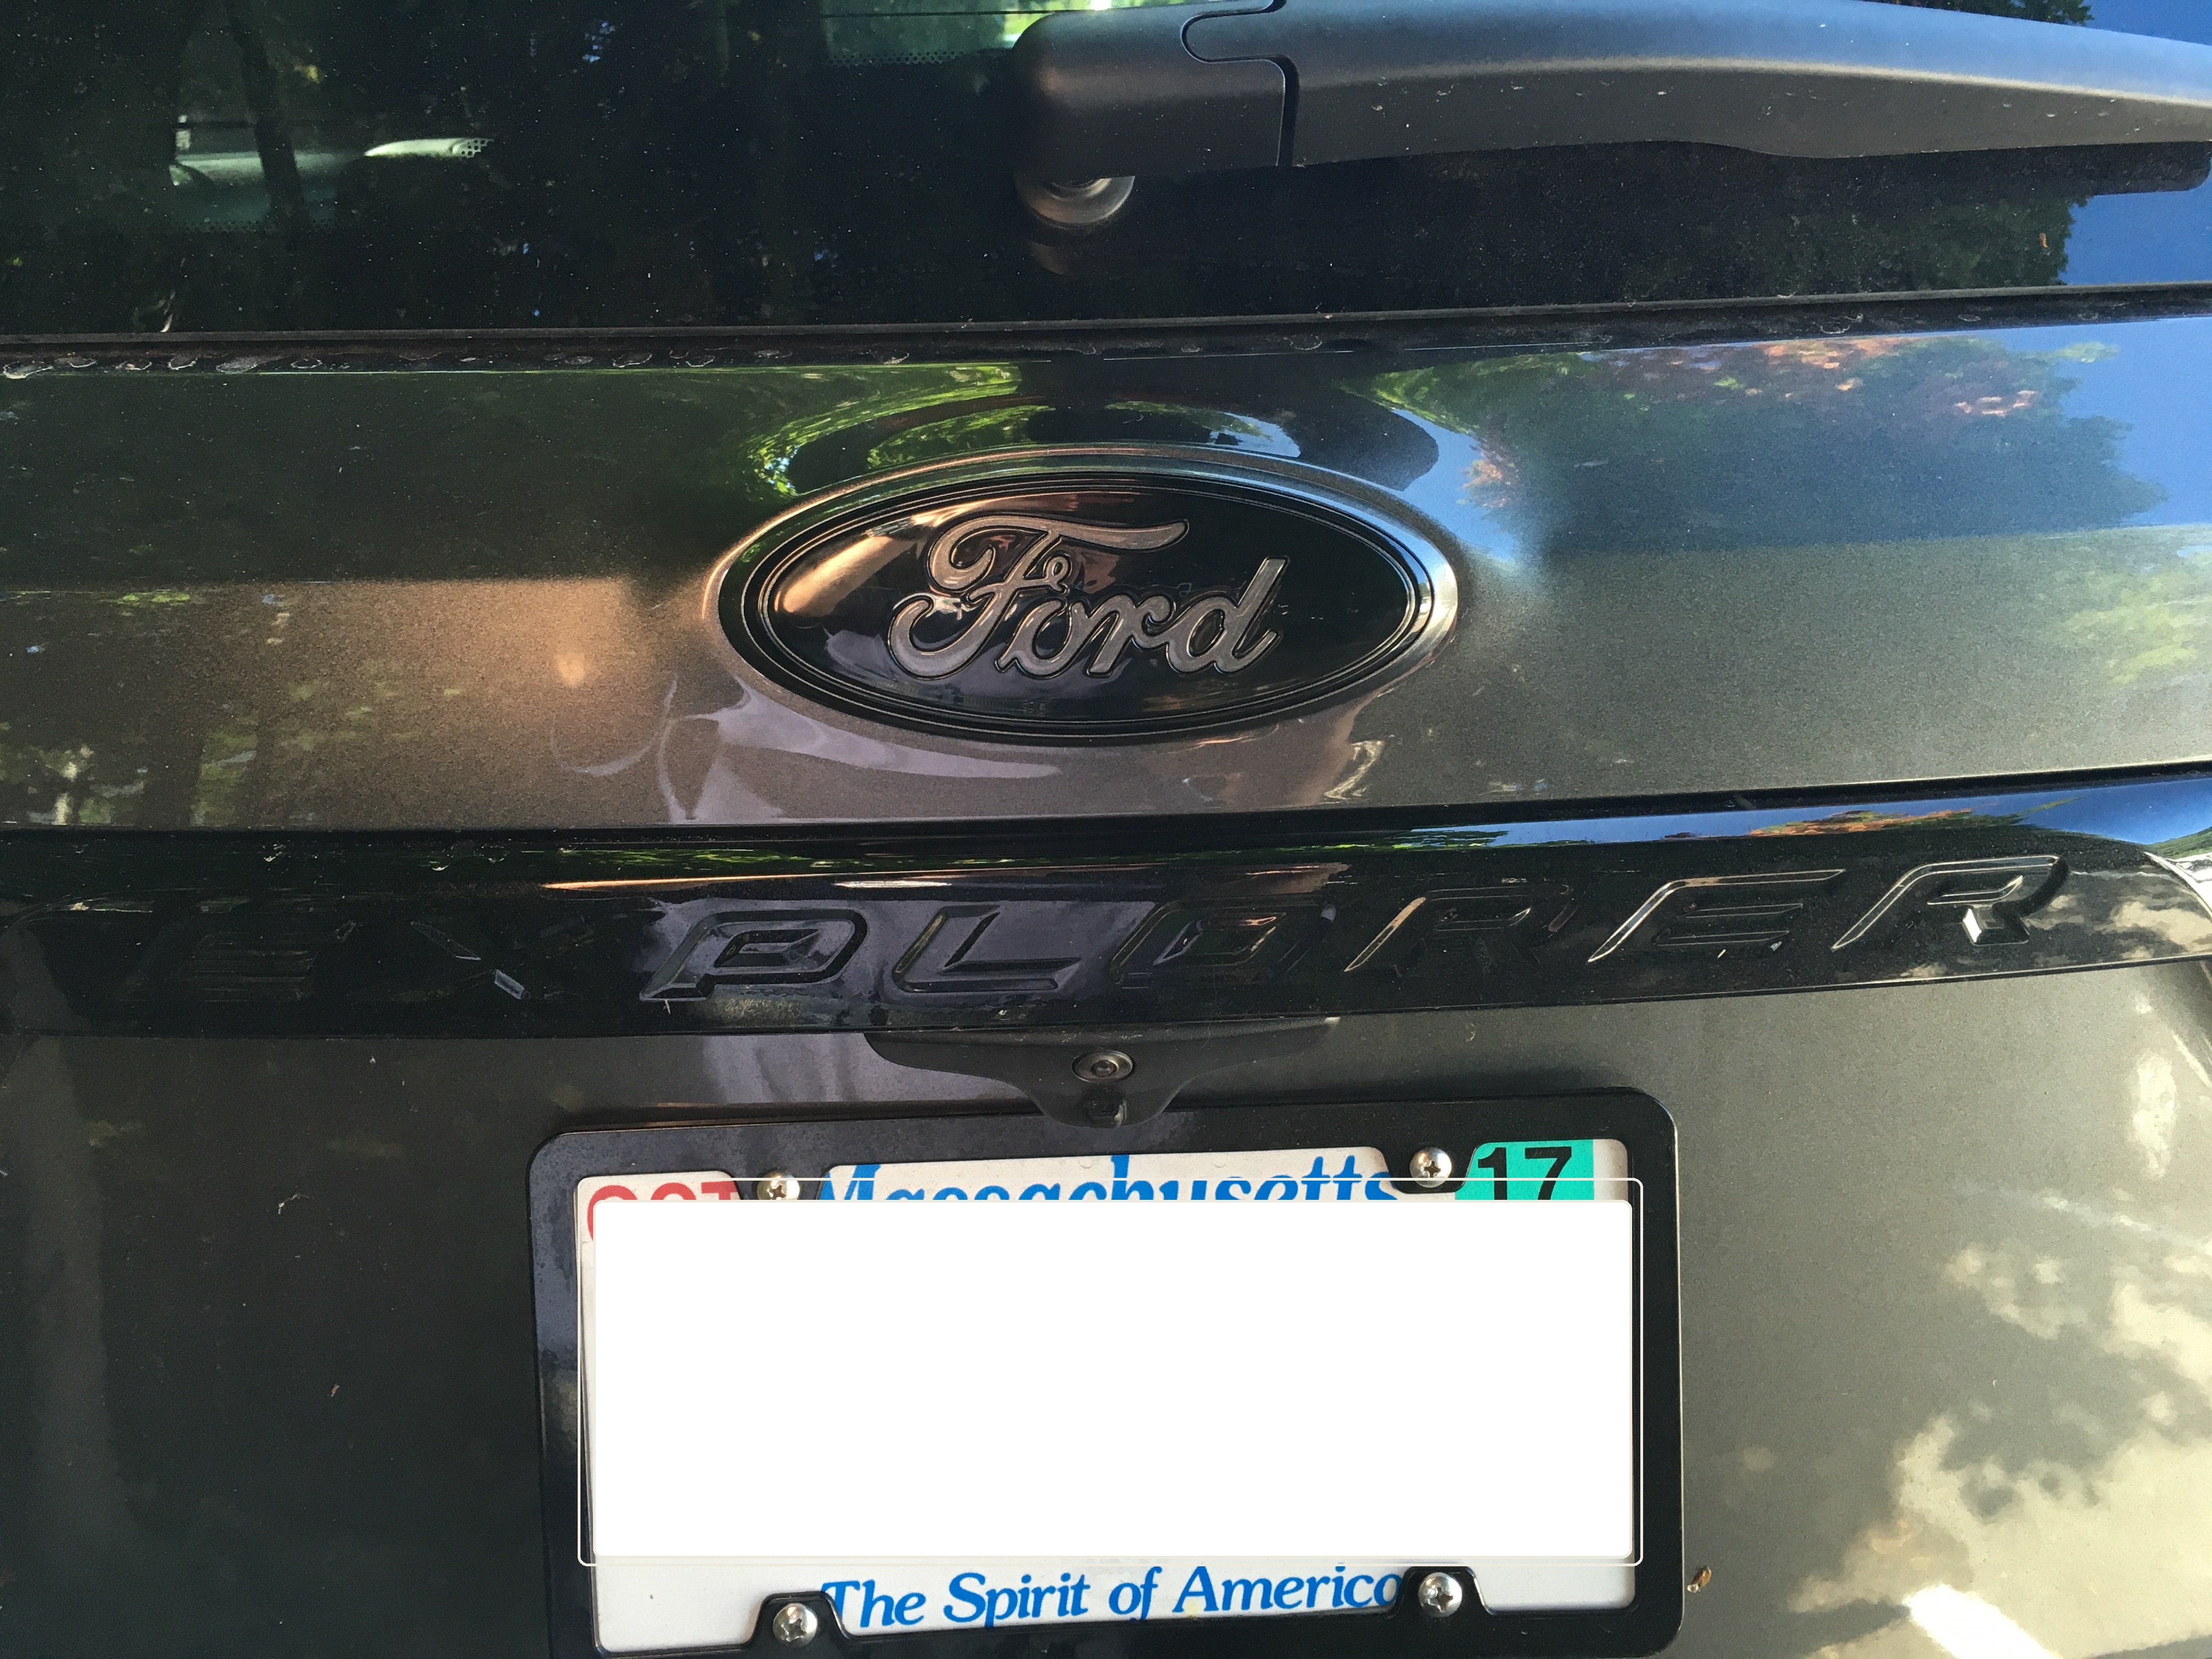 Rear Ford Emblem